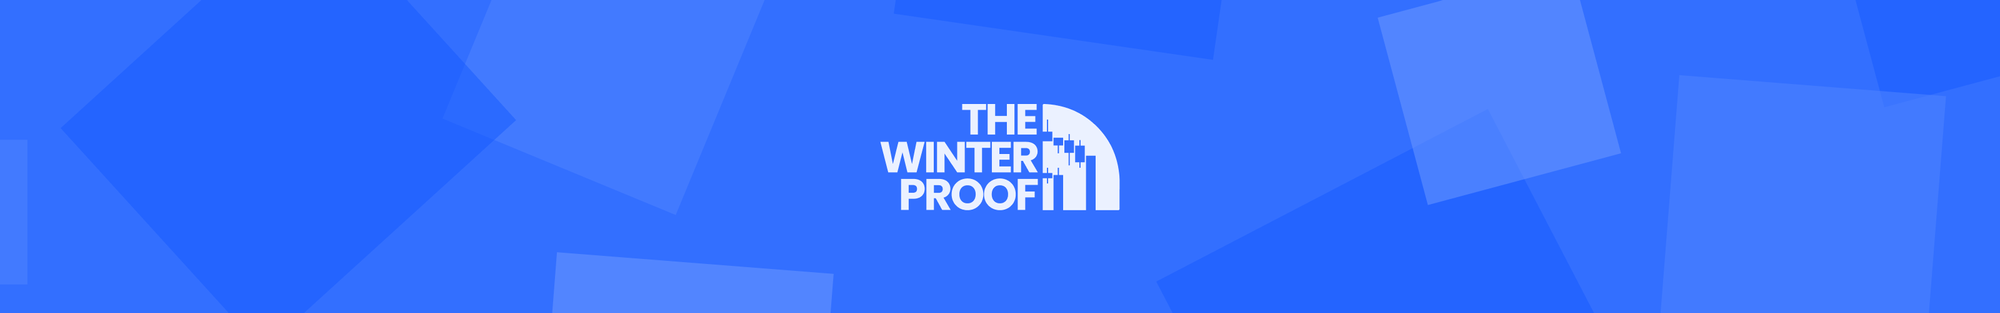 The Winterproof Framework - A Way Forward